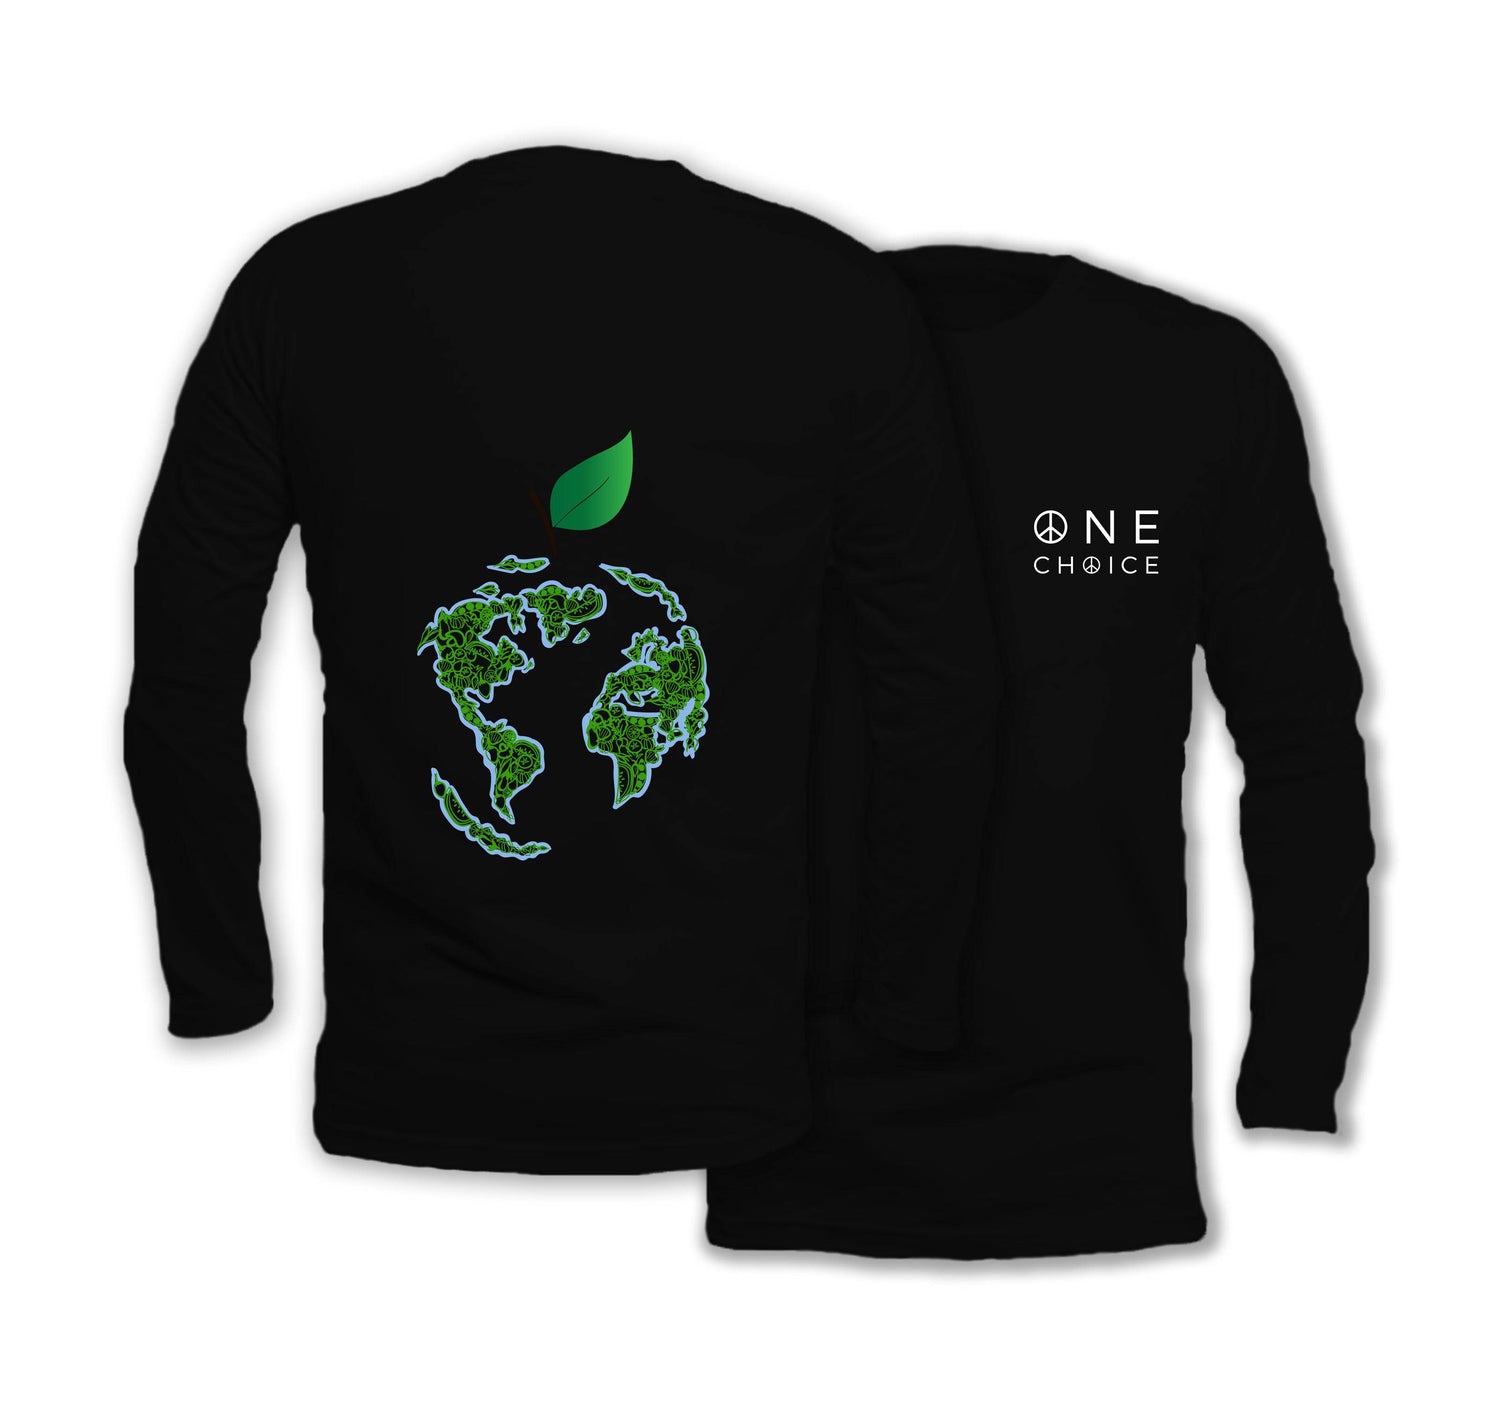 Keep It Green - Long Sleeve Organic Cotton T-Shirt - One Choice Apparel